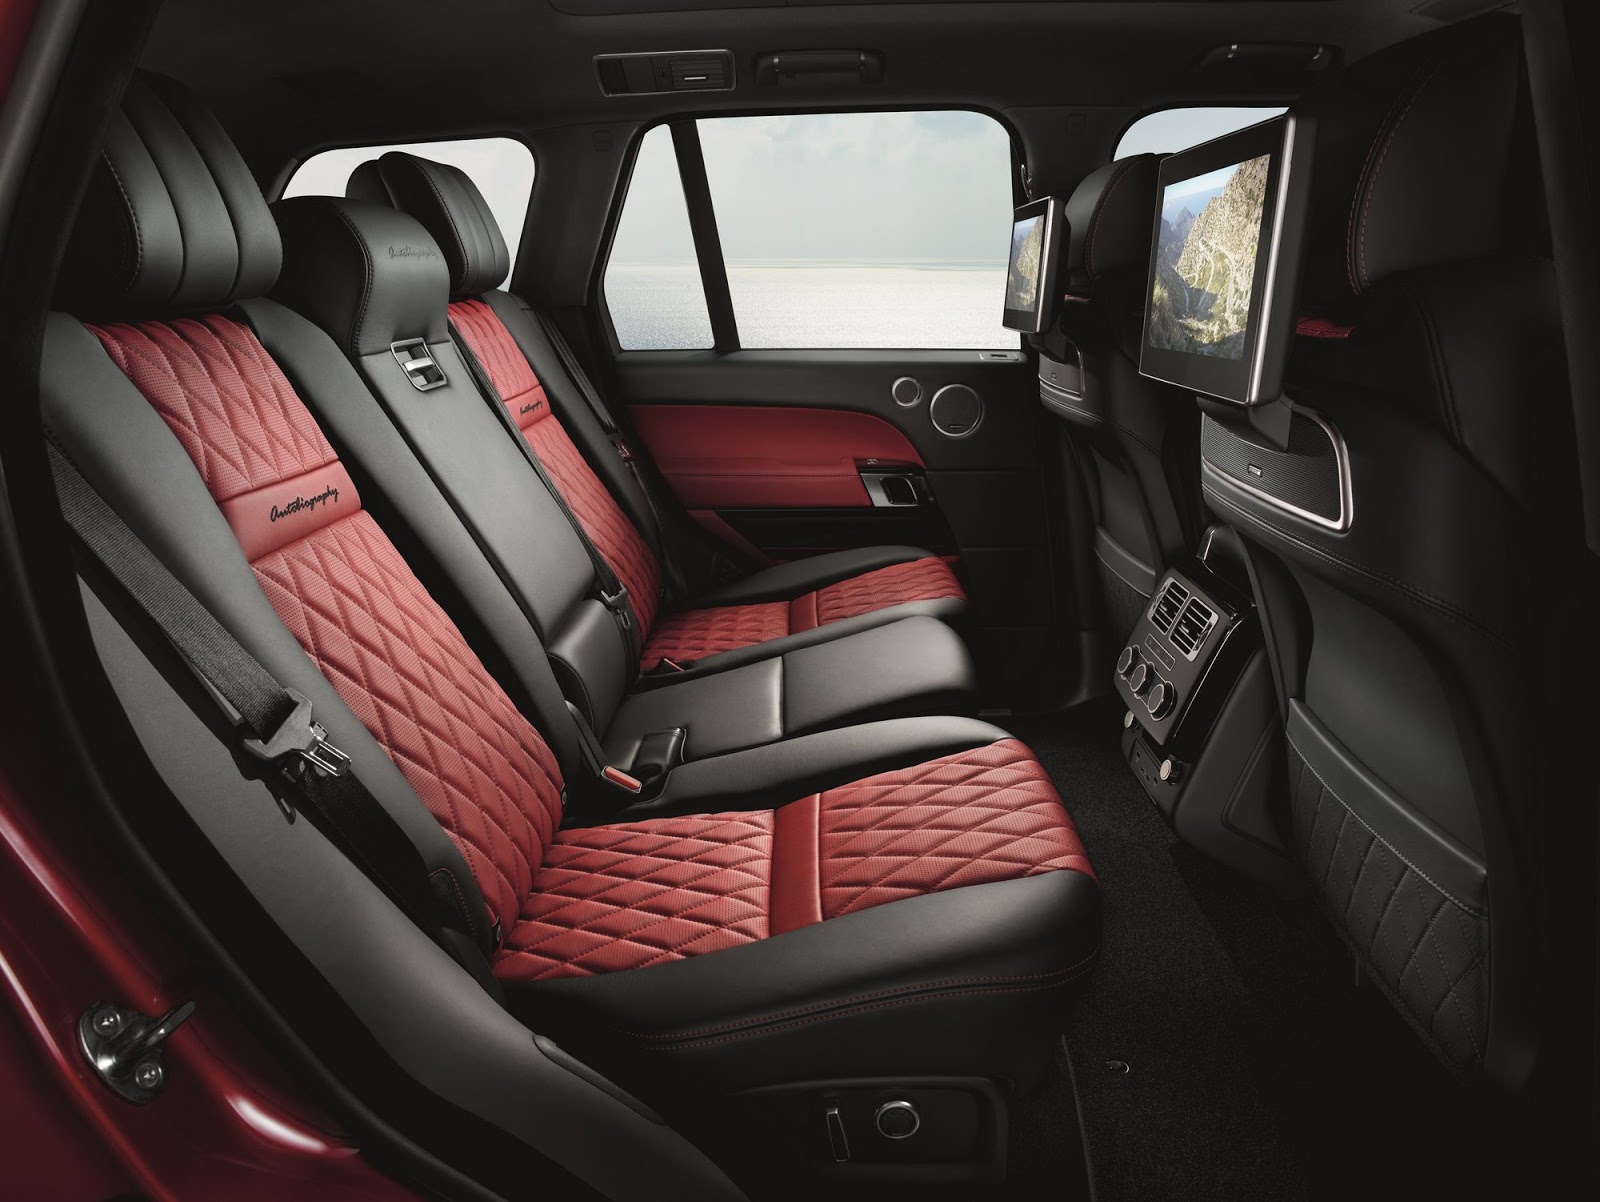 2017 Range Rover Model Interior